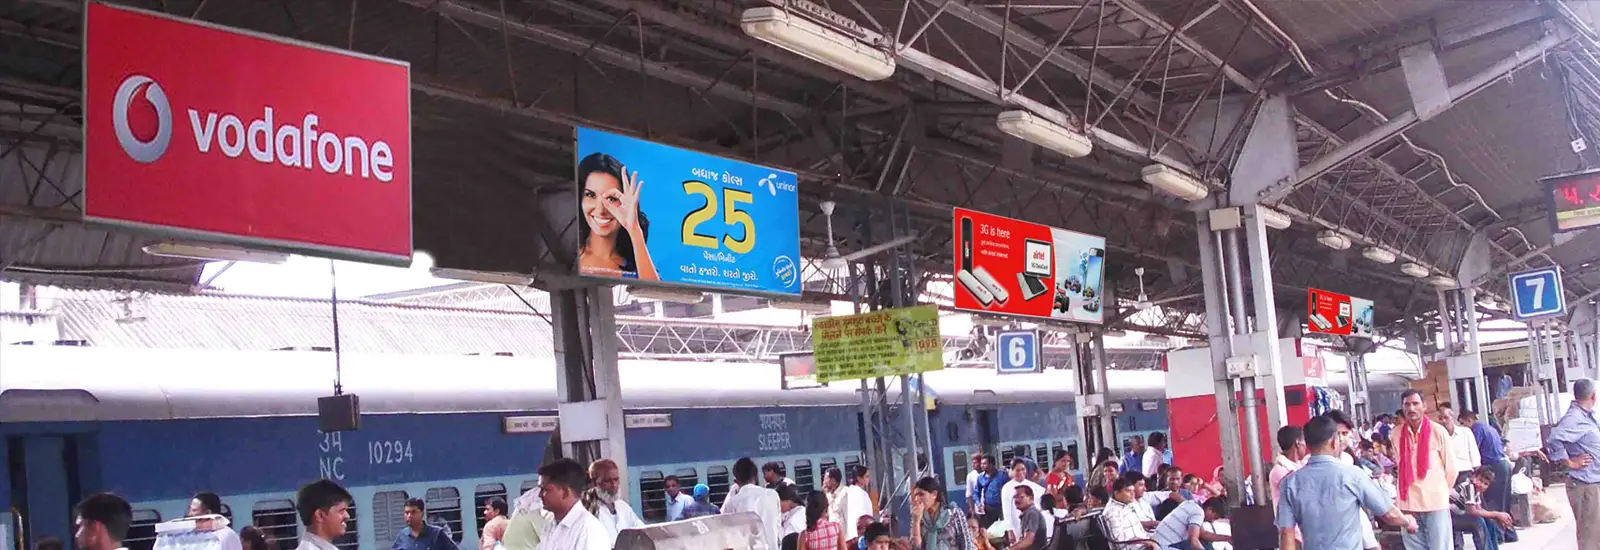 Railway Station Advertising, Railway advertisement, advertising in Railway Stations in Gujarat